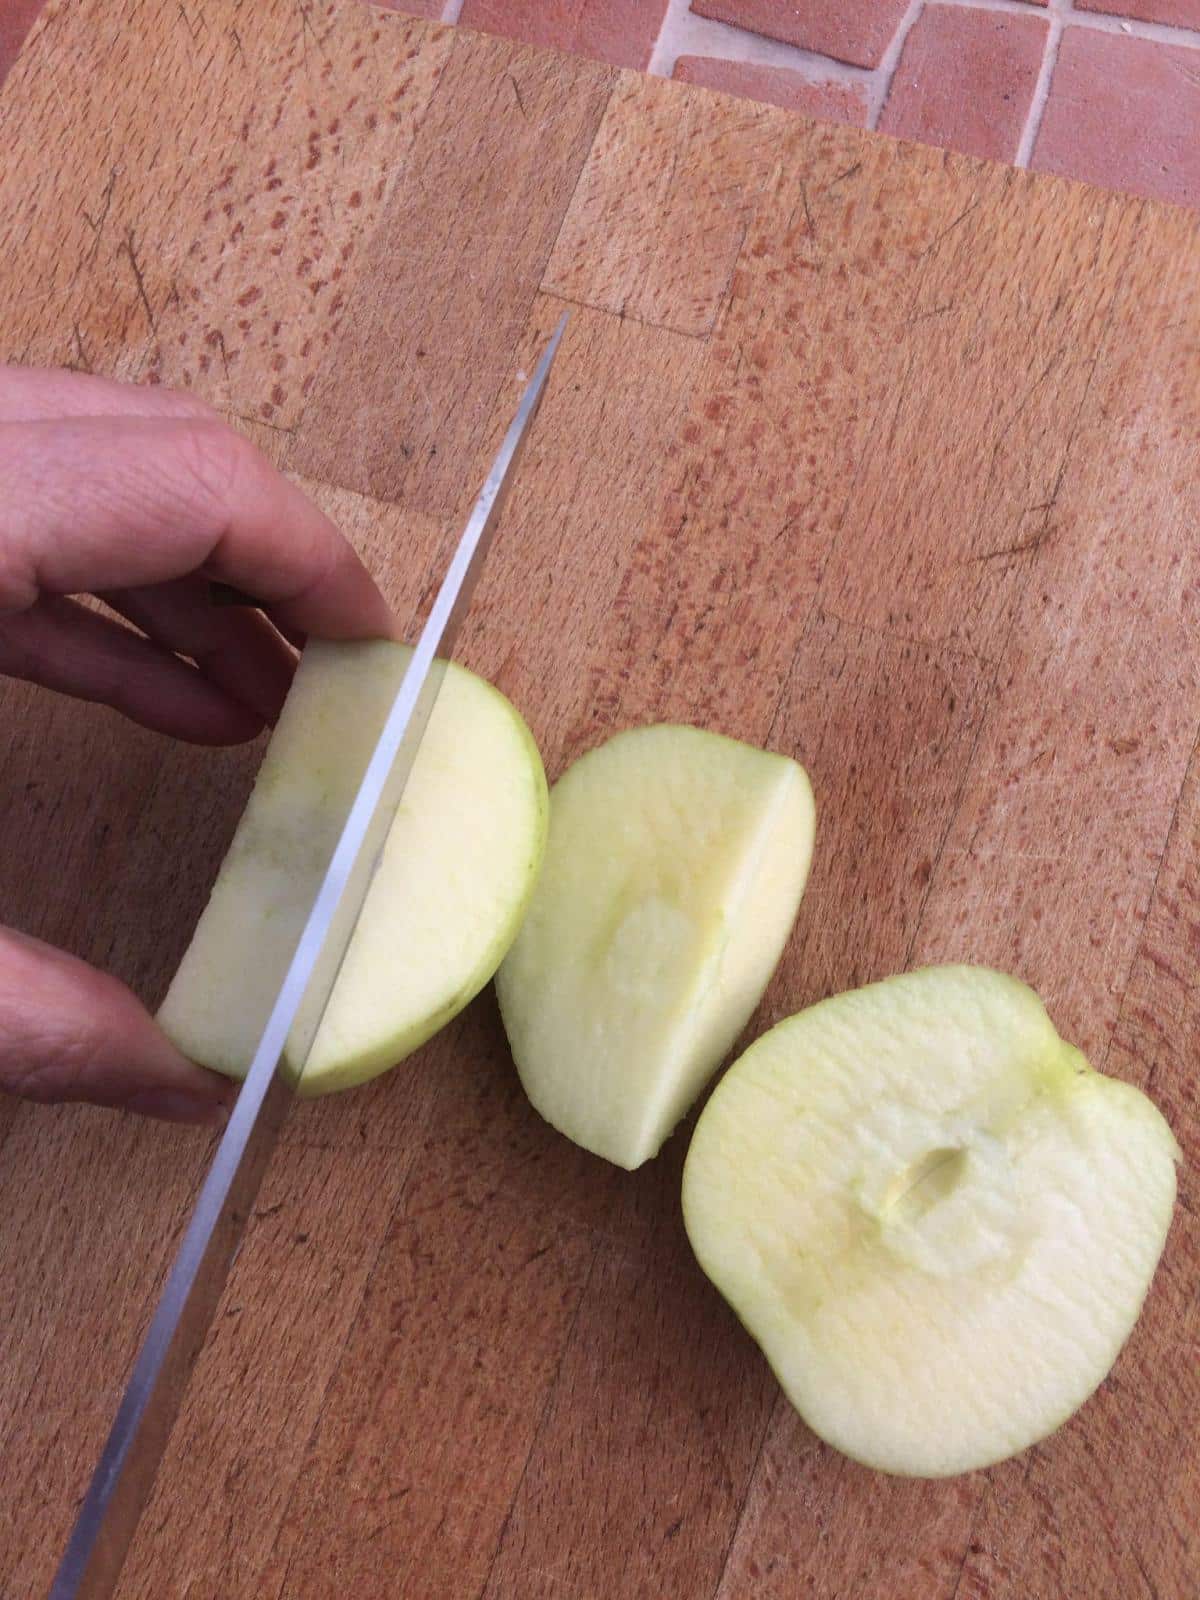 Third cut preparing apples.